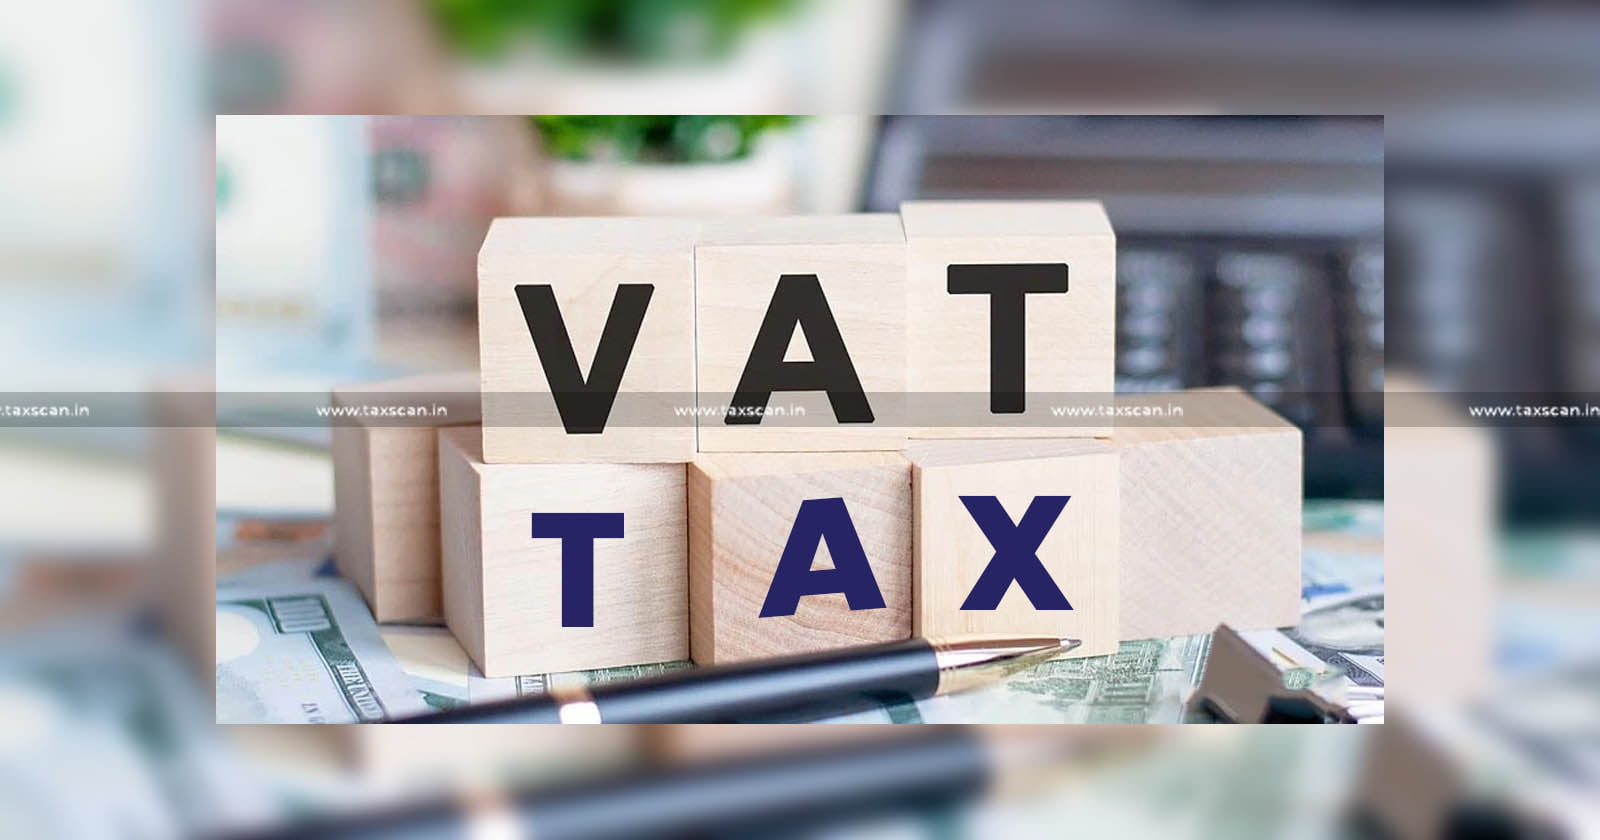 VAT - Payment - Income - Tax - Act - ITAT - TAXSCAN